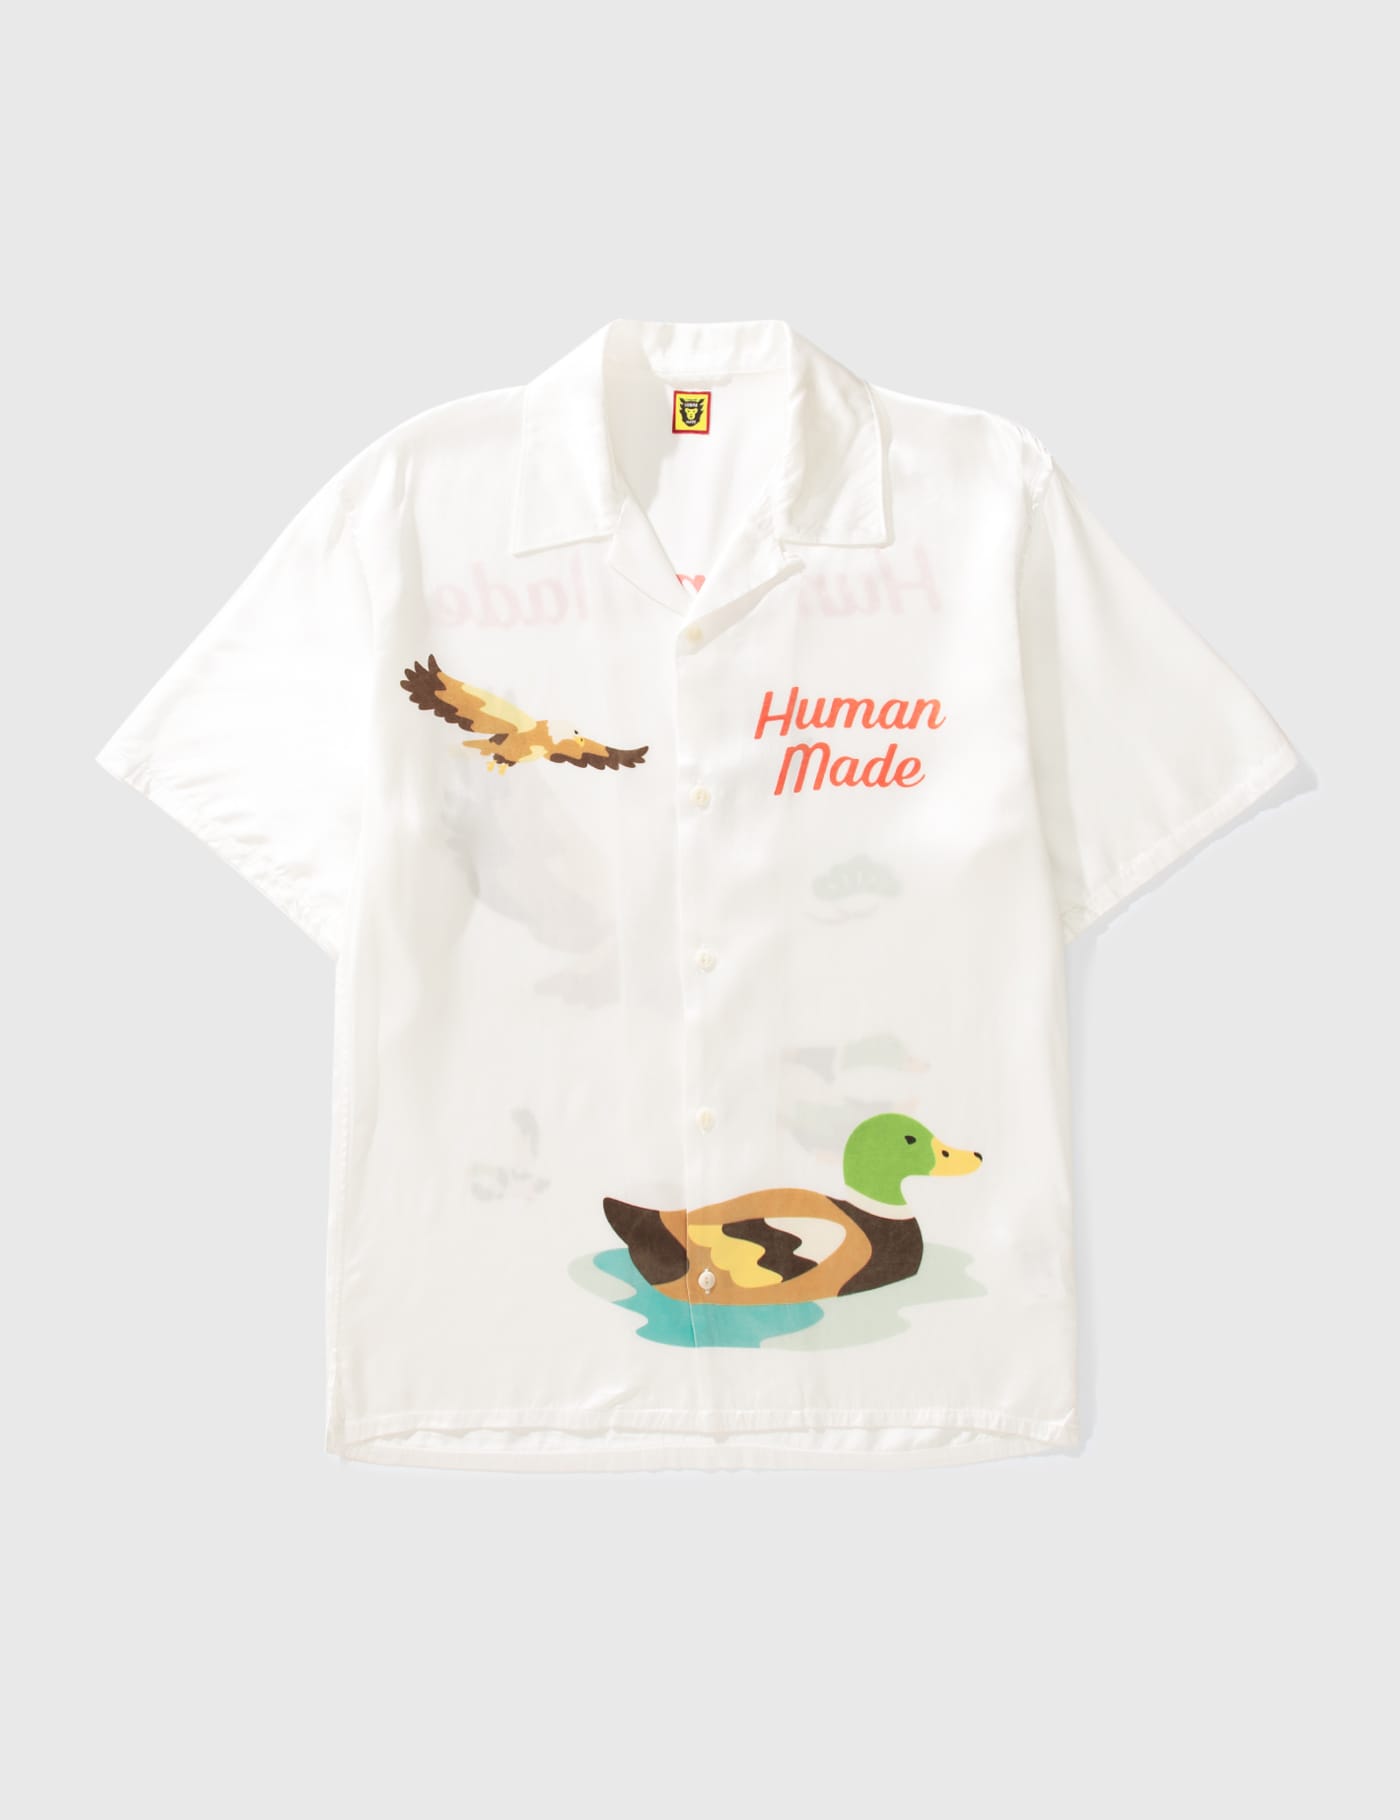 Human Made - Aloha Shirt | HBX - Globally Curated Fashion and